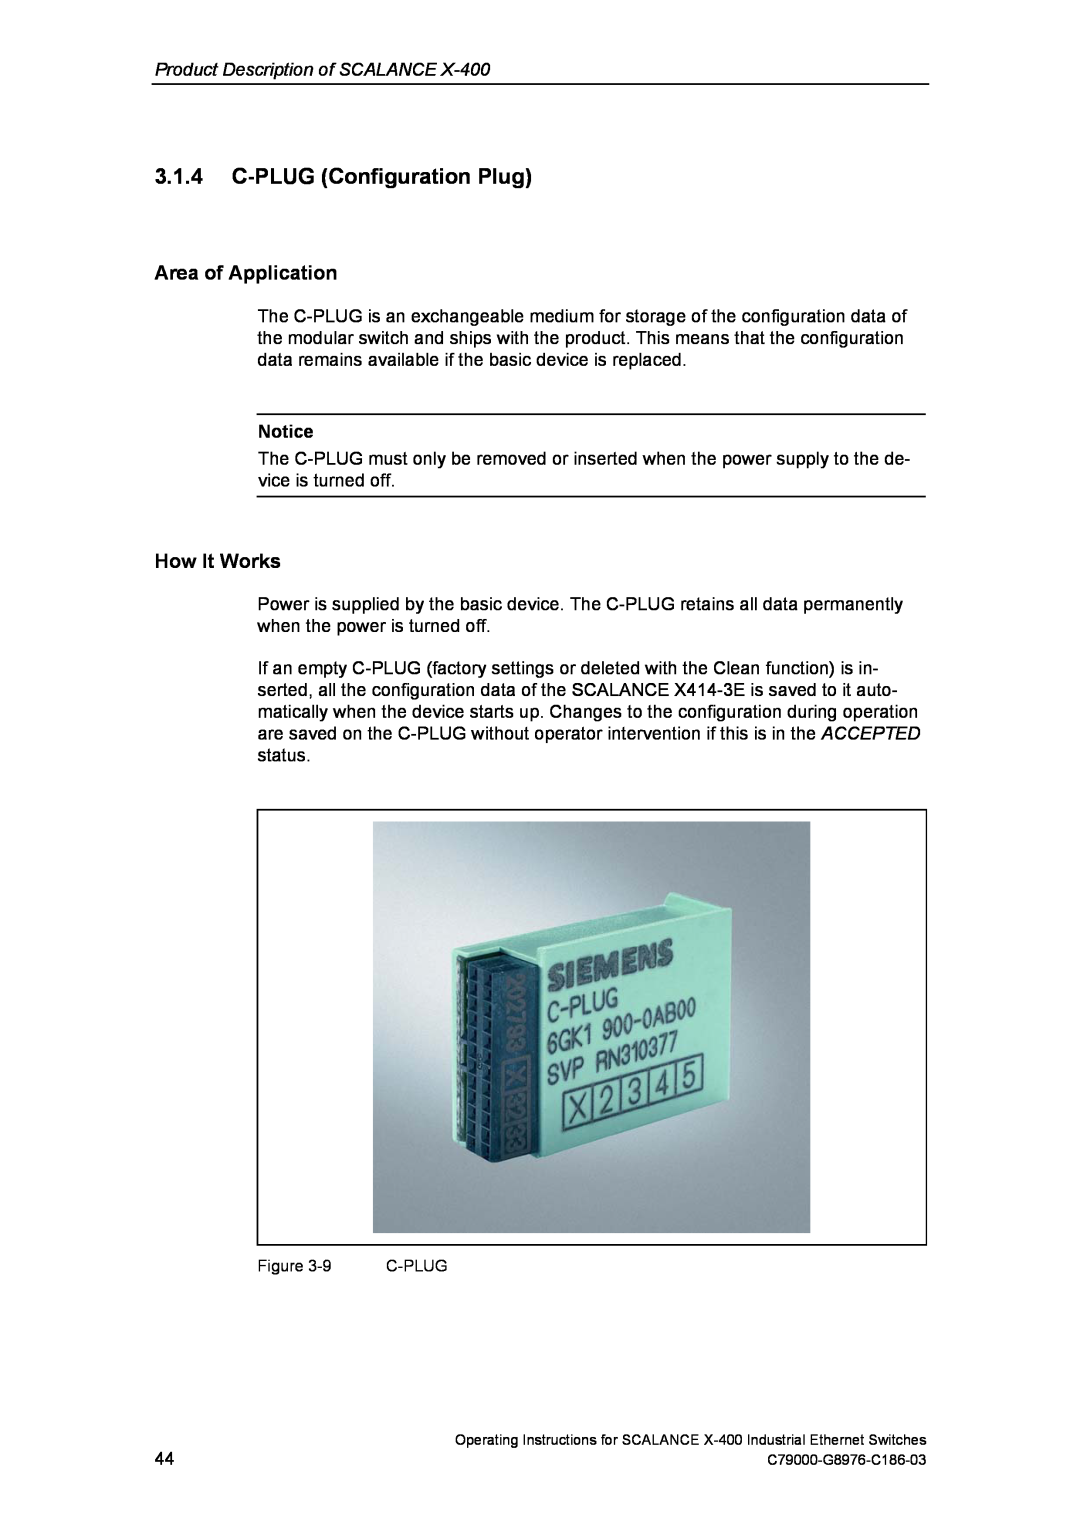 Siemens X-400 C-PLUG Configuration Plug, Area of Application, How It Works, Product Description of SCALANCE 